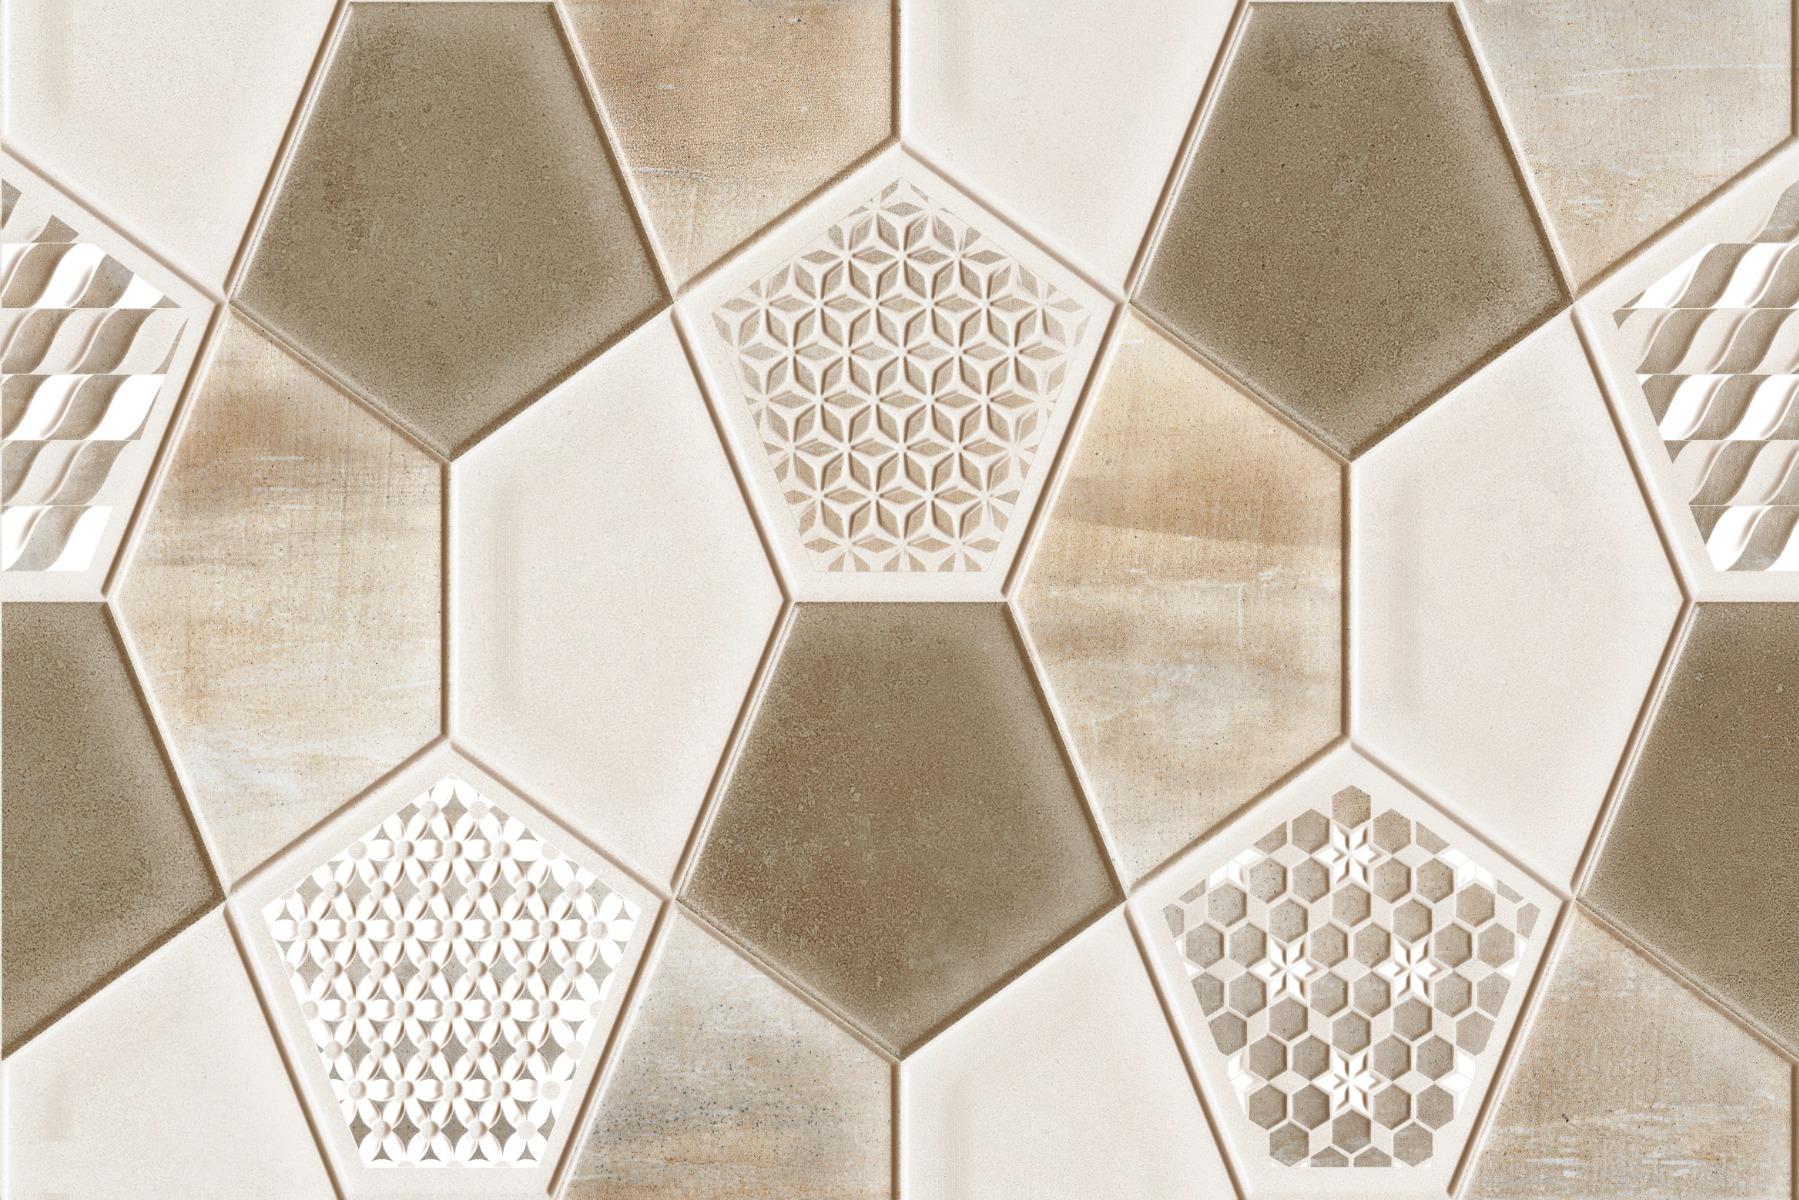 Estilo2.0 for Bathroom Tiles, Kitchen Tiles, Accent Tiles, Dining Room Tiles